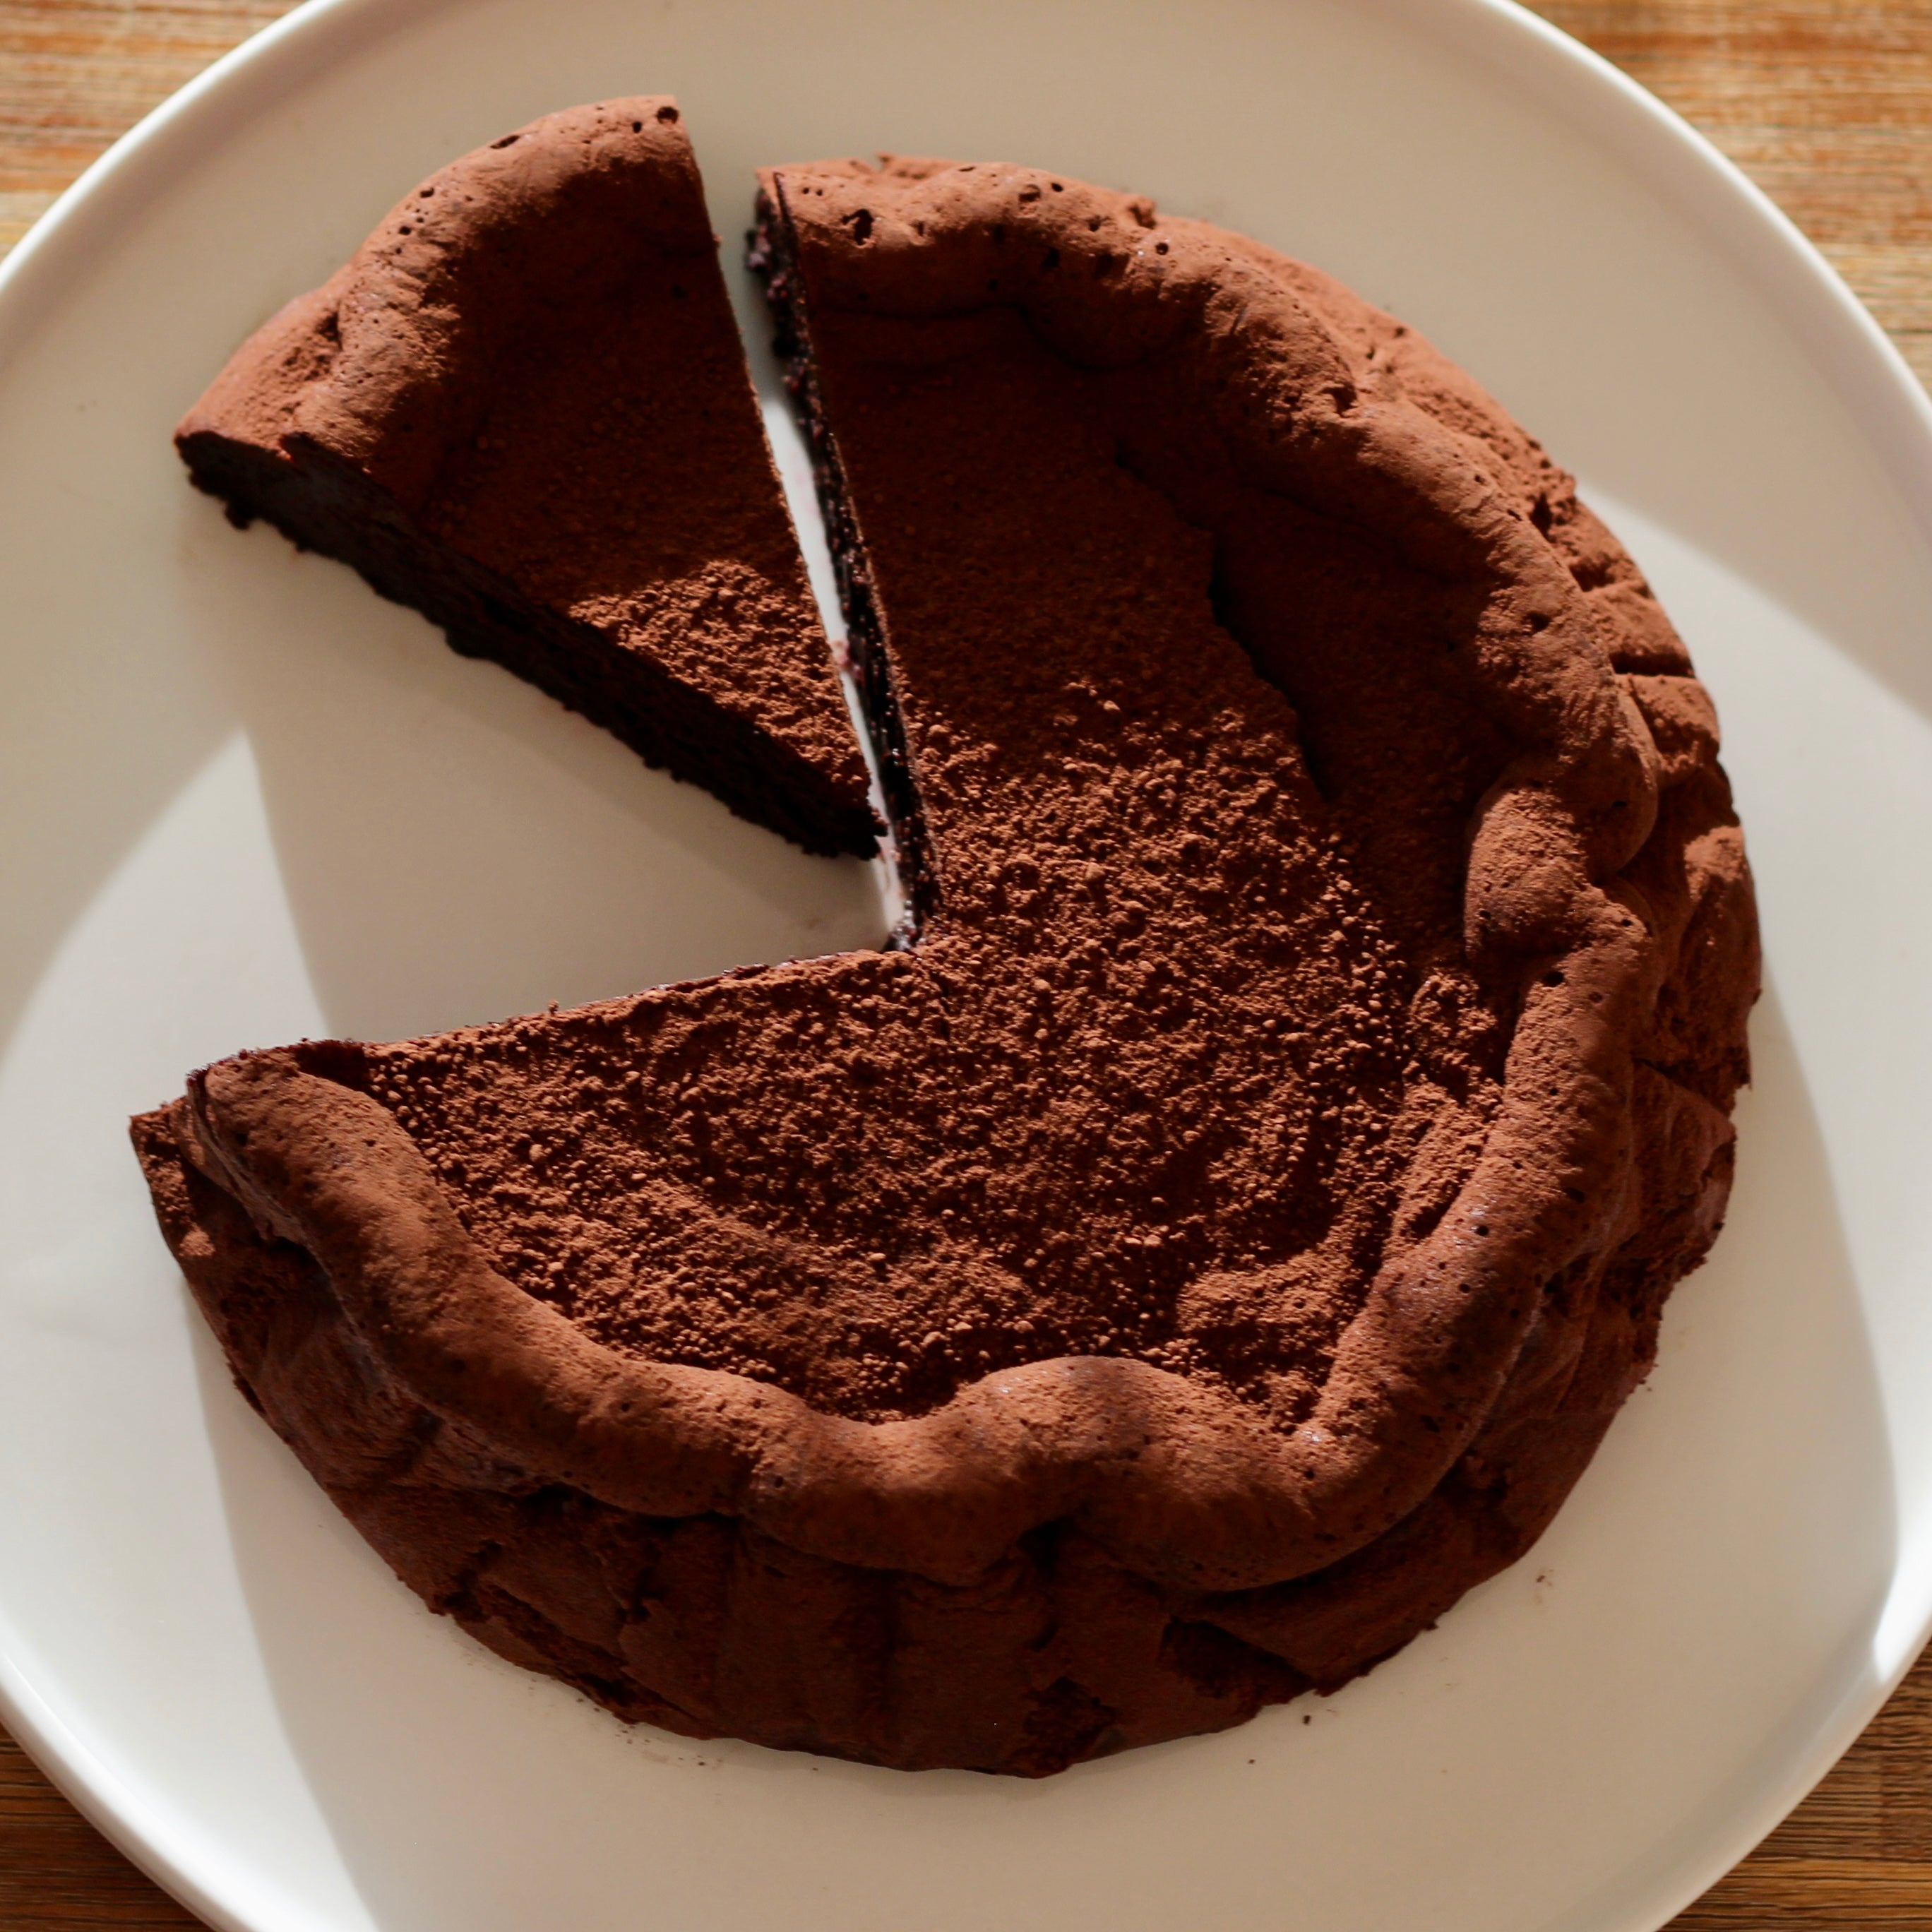 Chocolate and beetroot cake recipe - Recipes - delicious.com.au